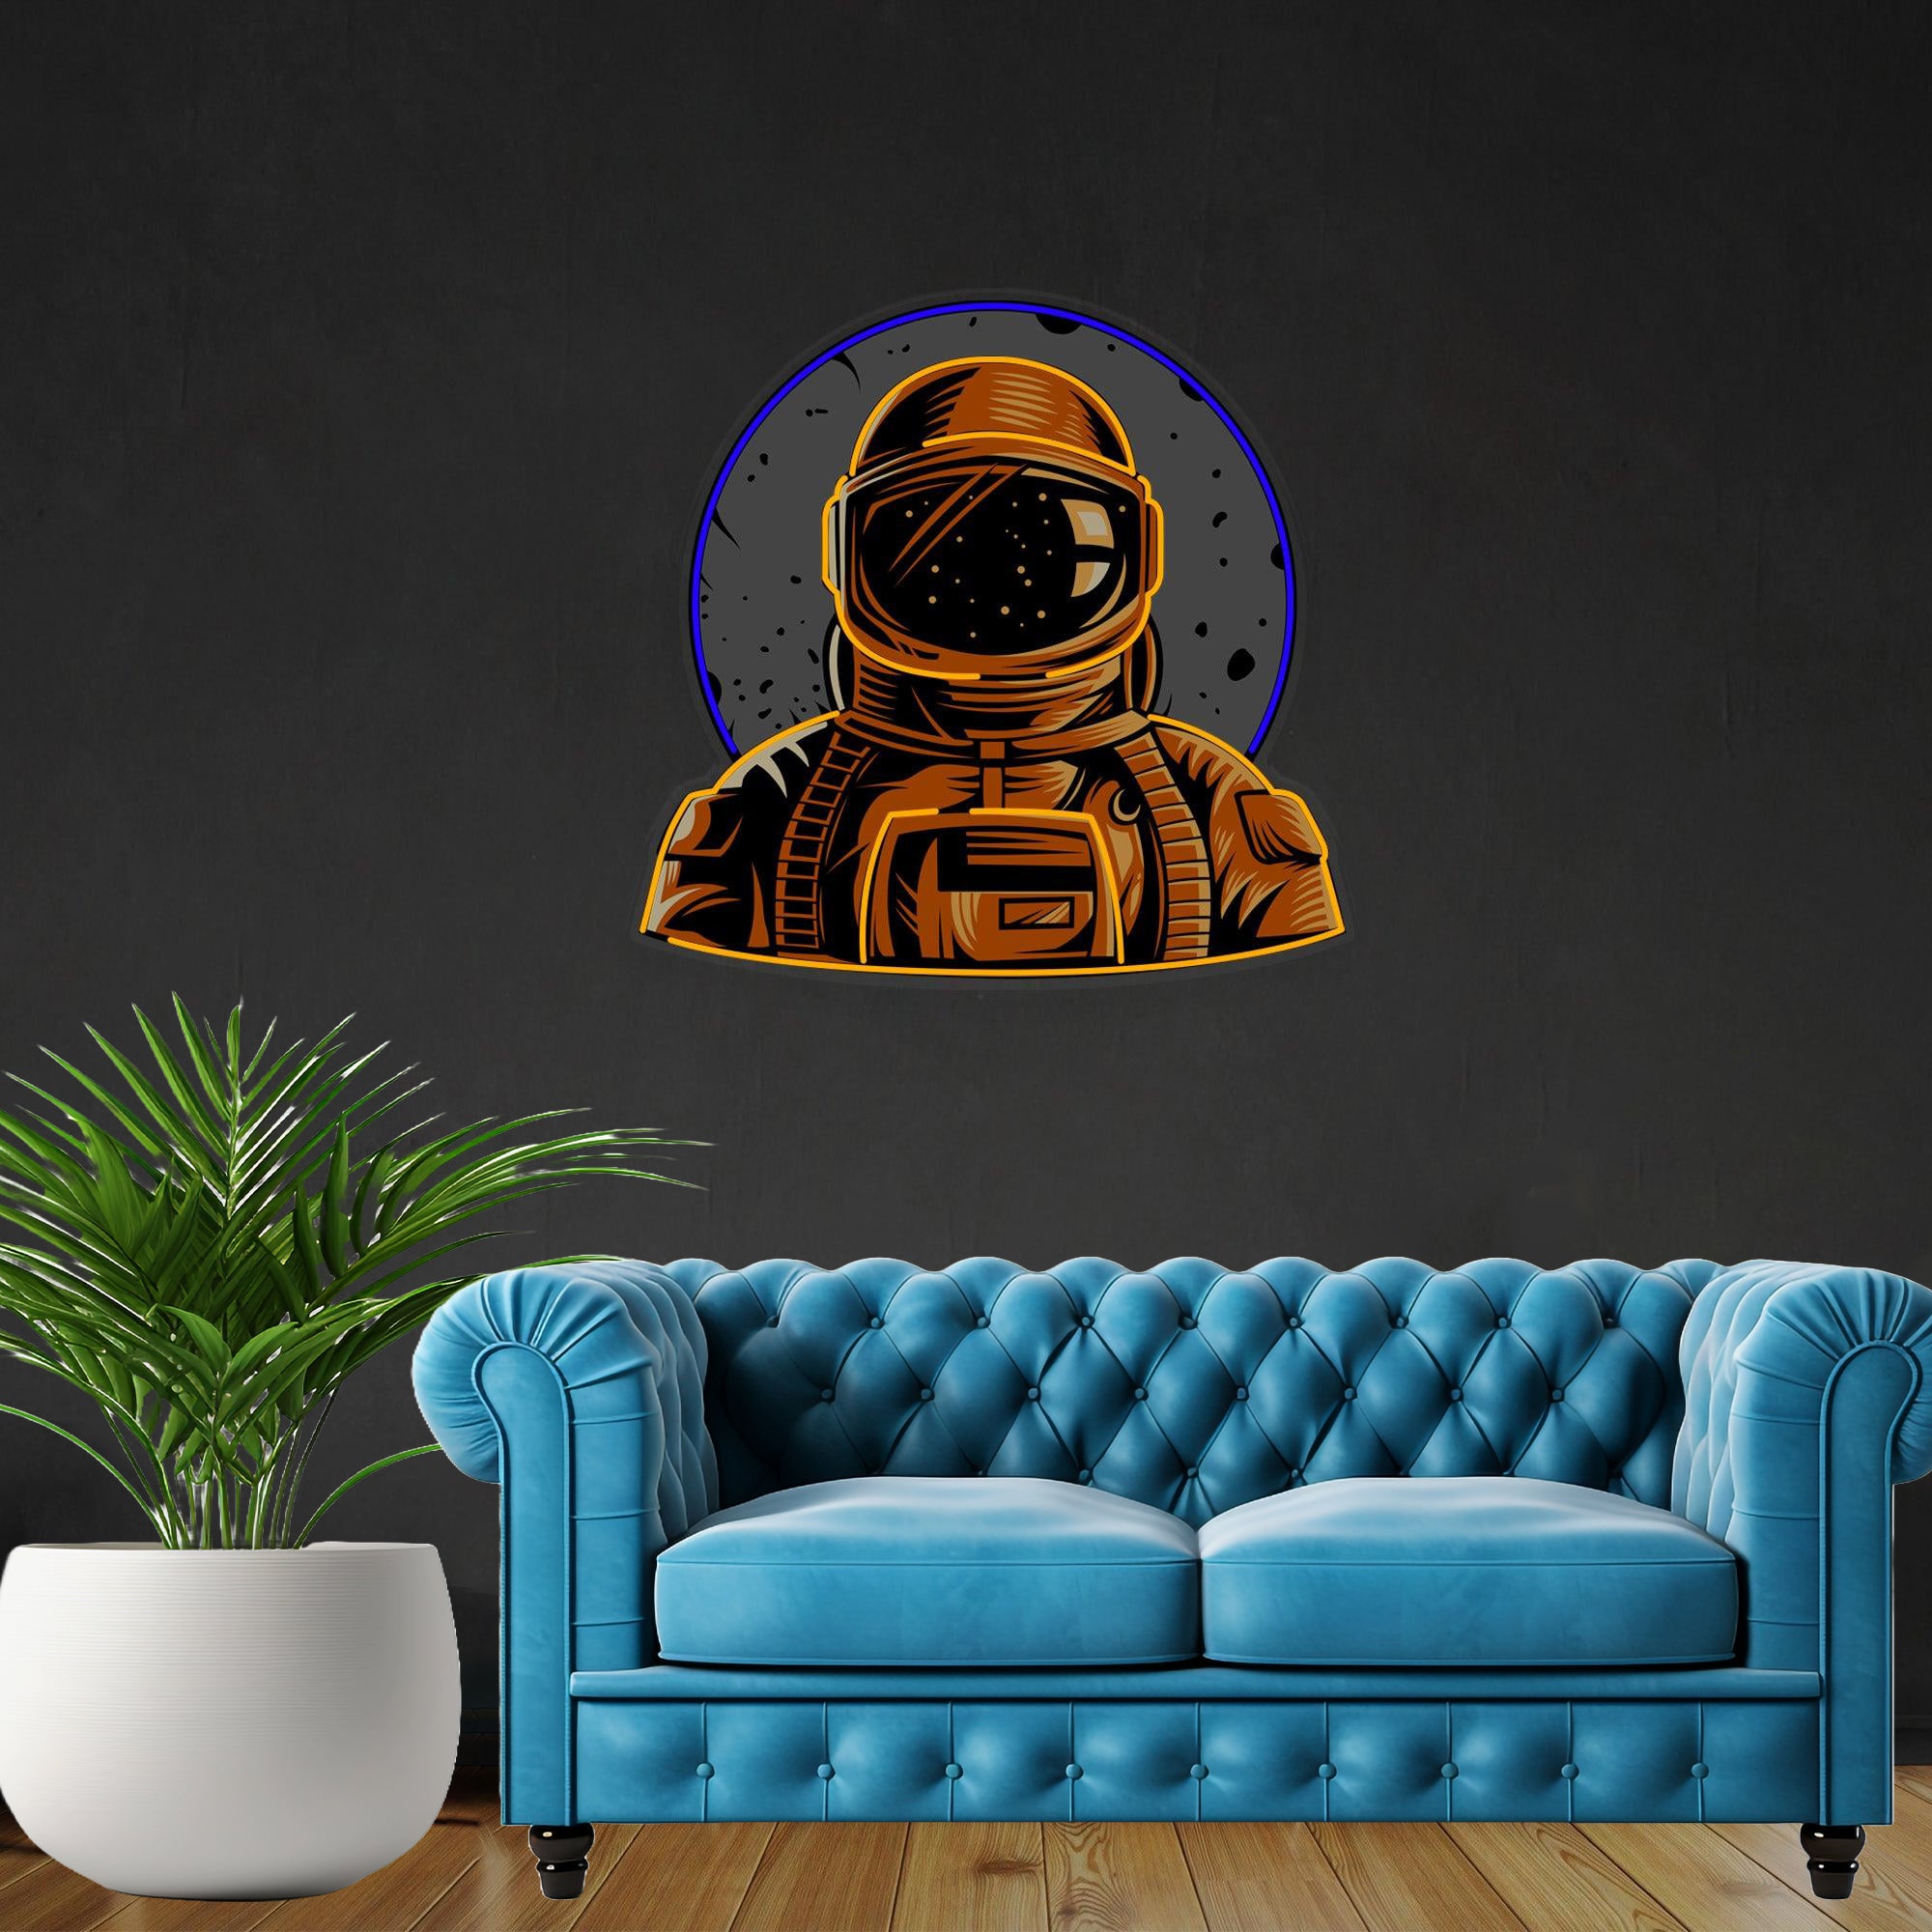 Astronaut Emblem Led Neon Light